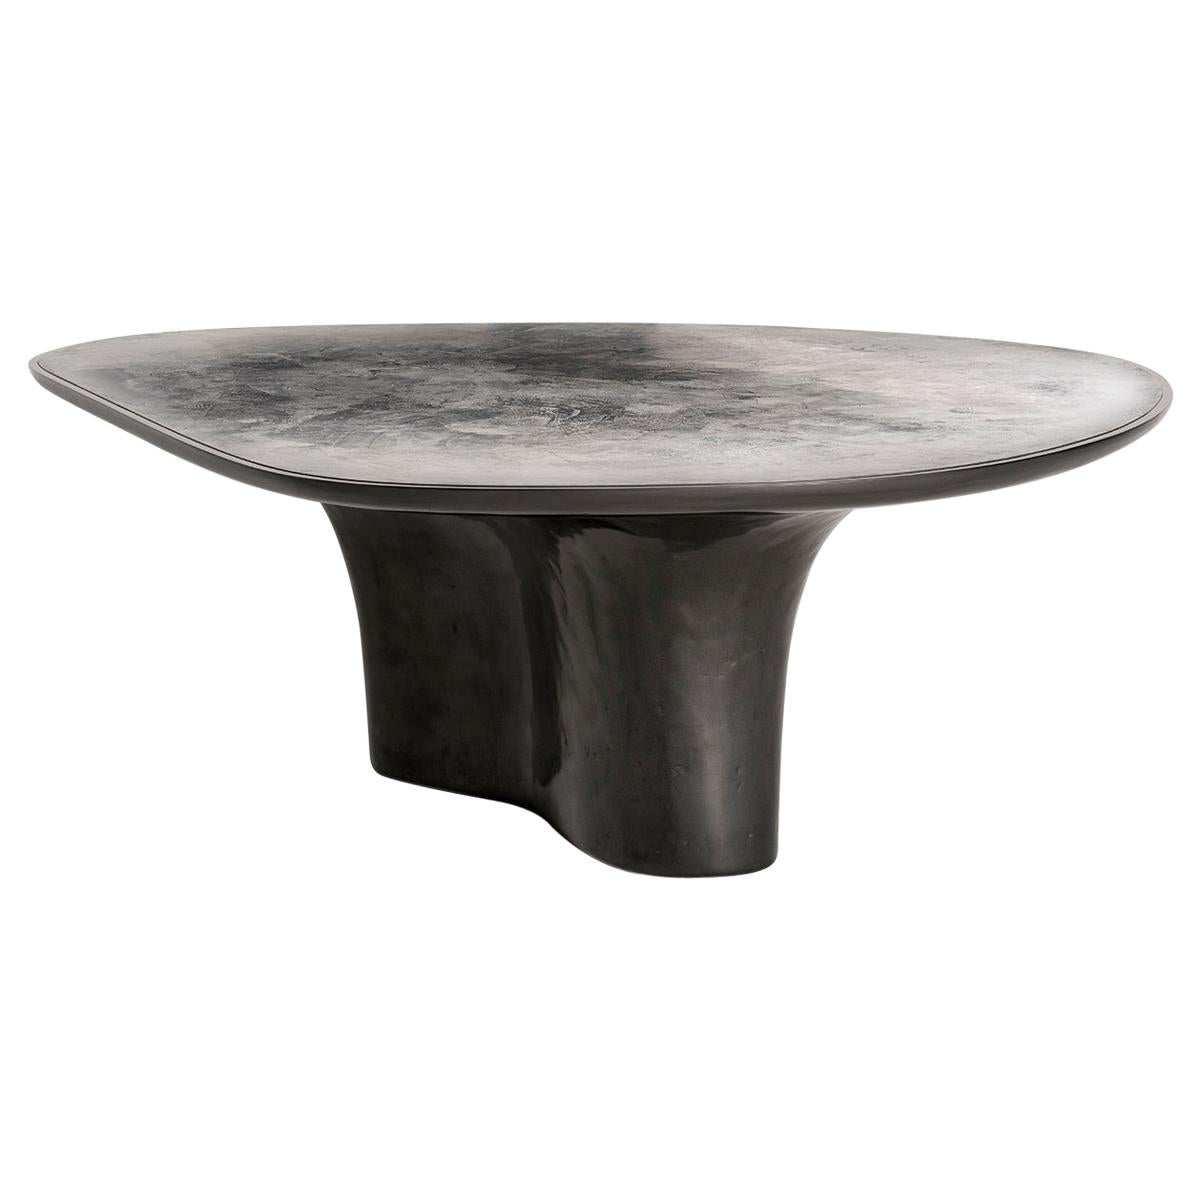 NR, 21st Century European Black Circular Custom-Made Contemporary Dining Table For Sale